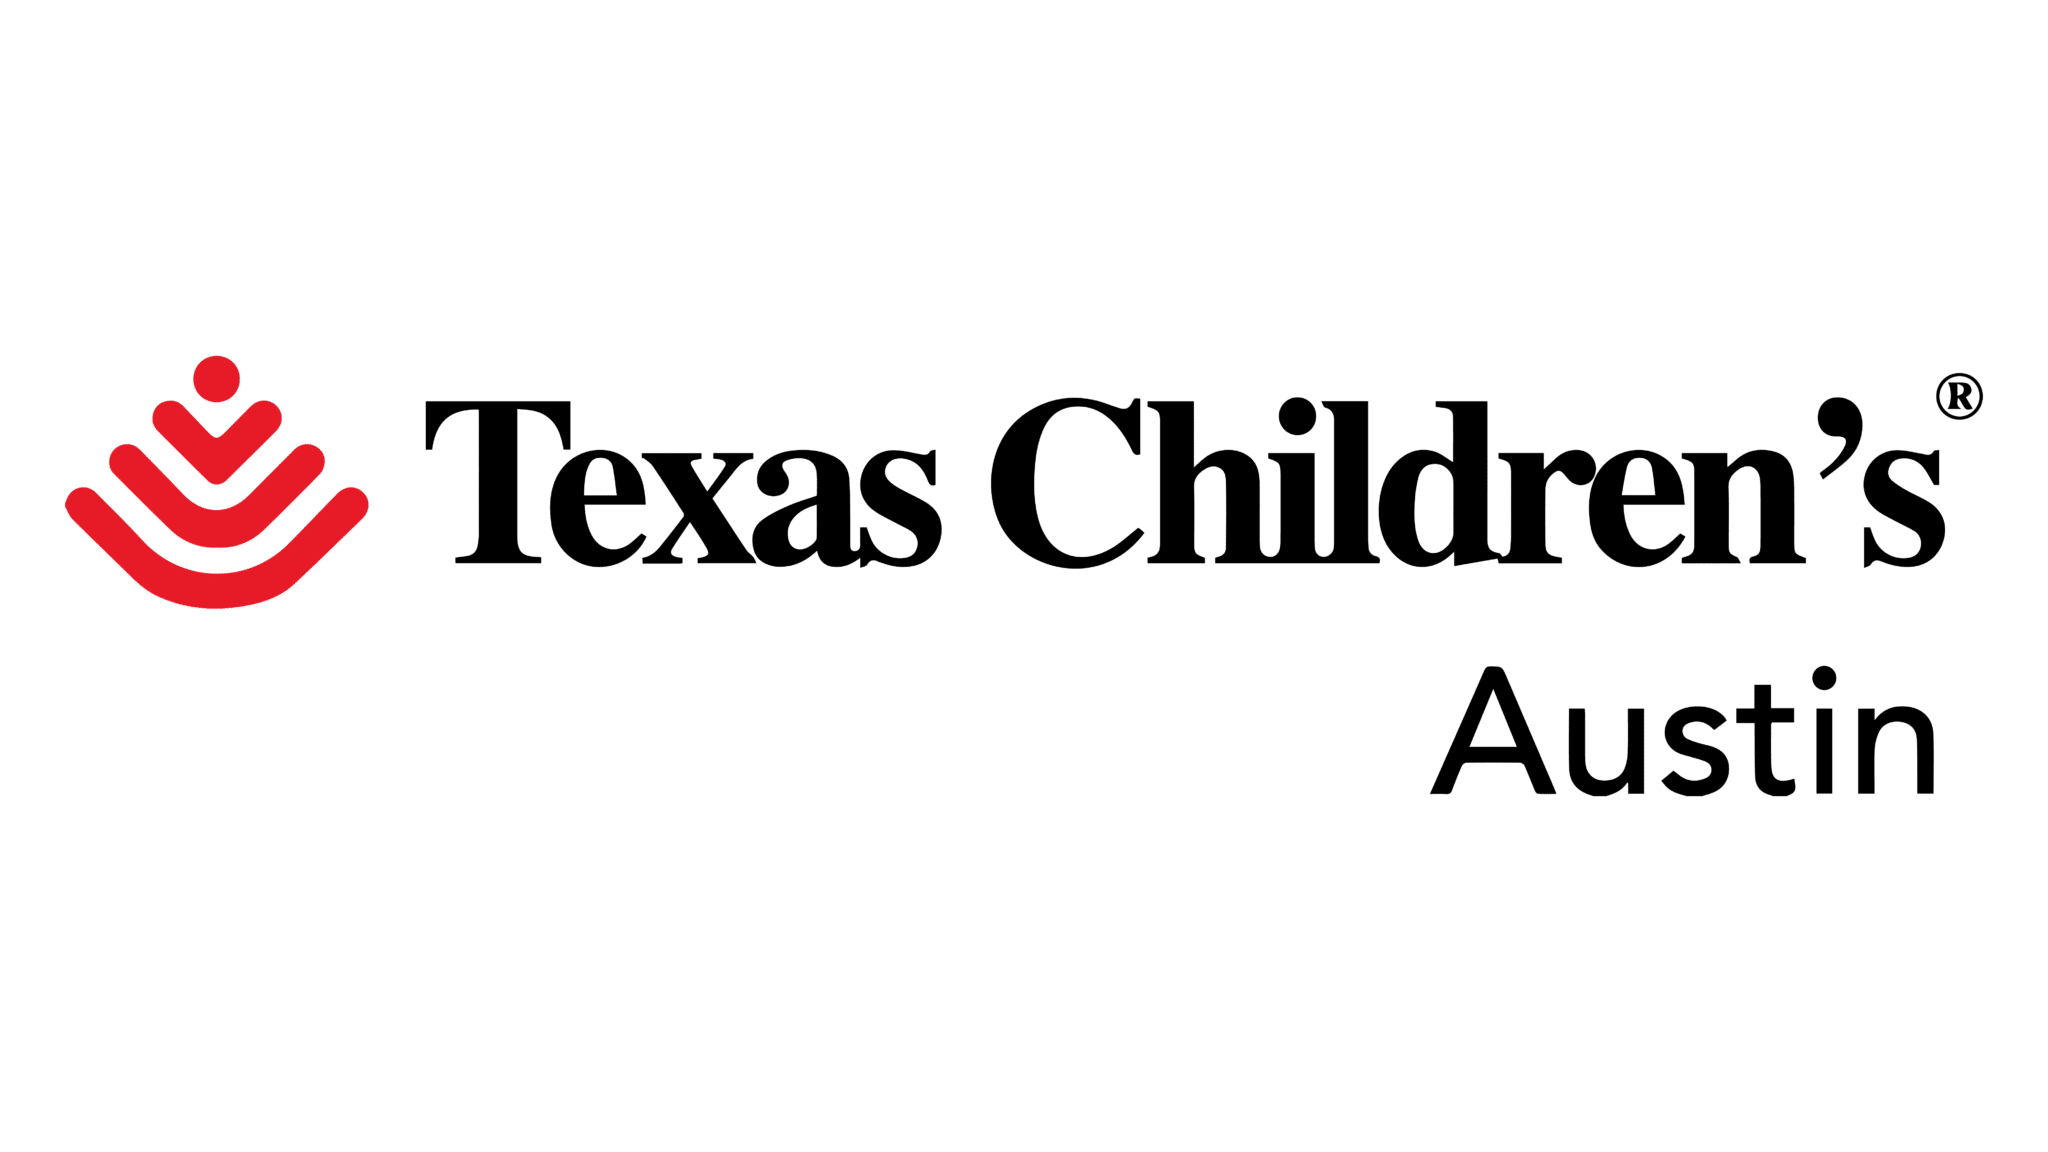 Live From the Heart Presenting Sponsor Texas Children's Austin